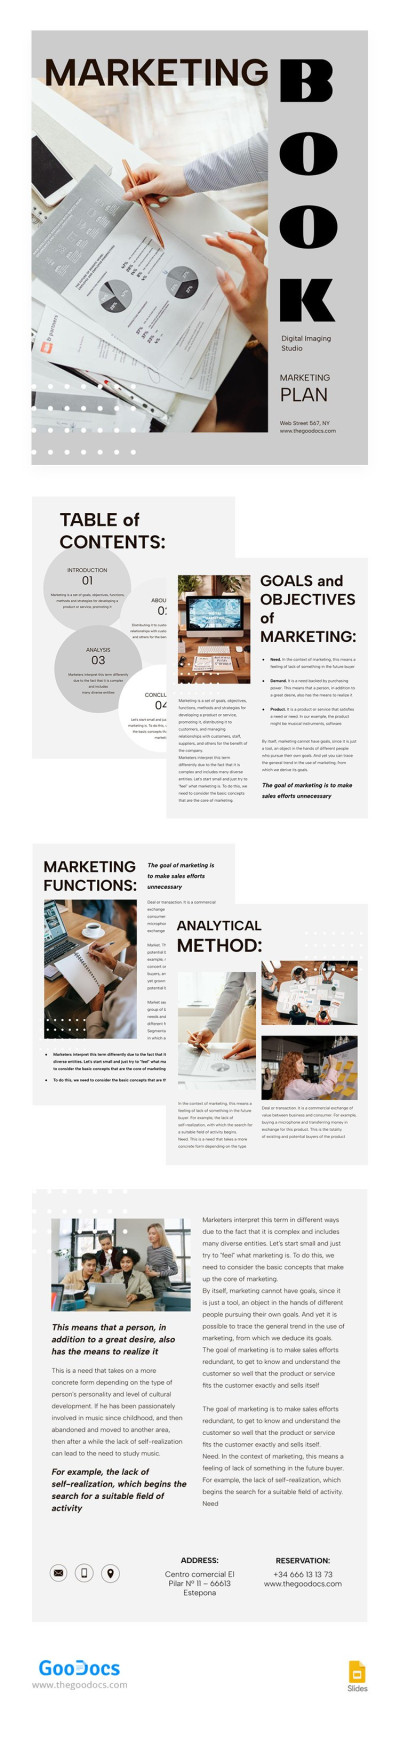 Digital Marketing Book - Marketing Books